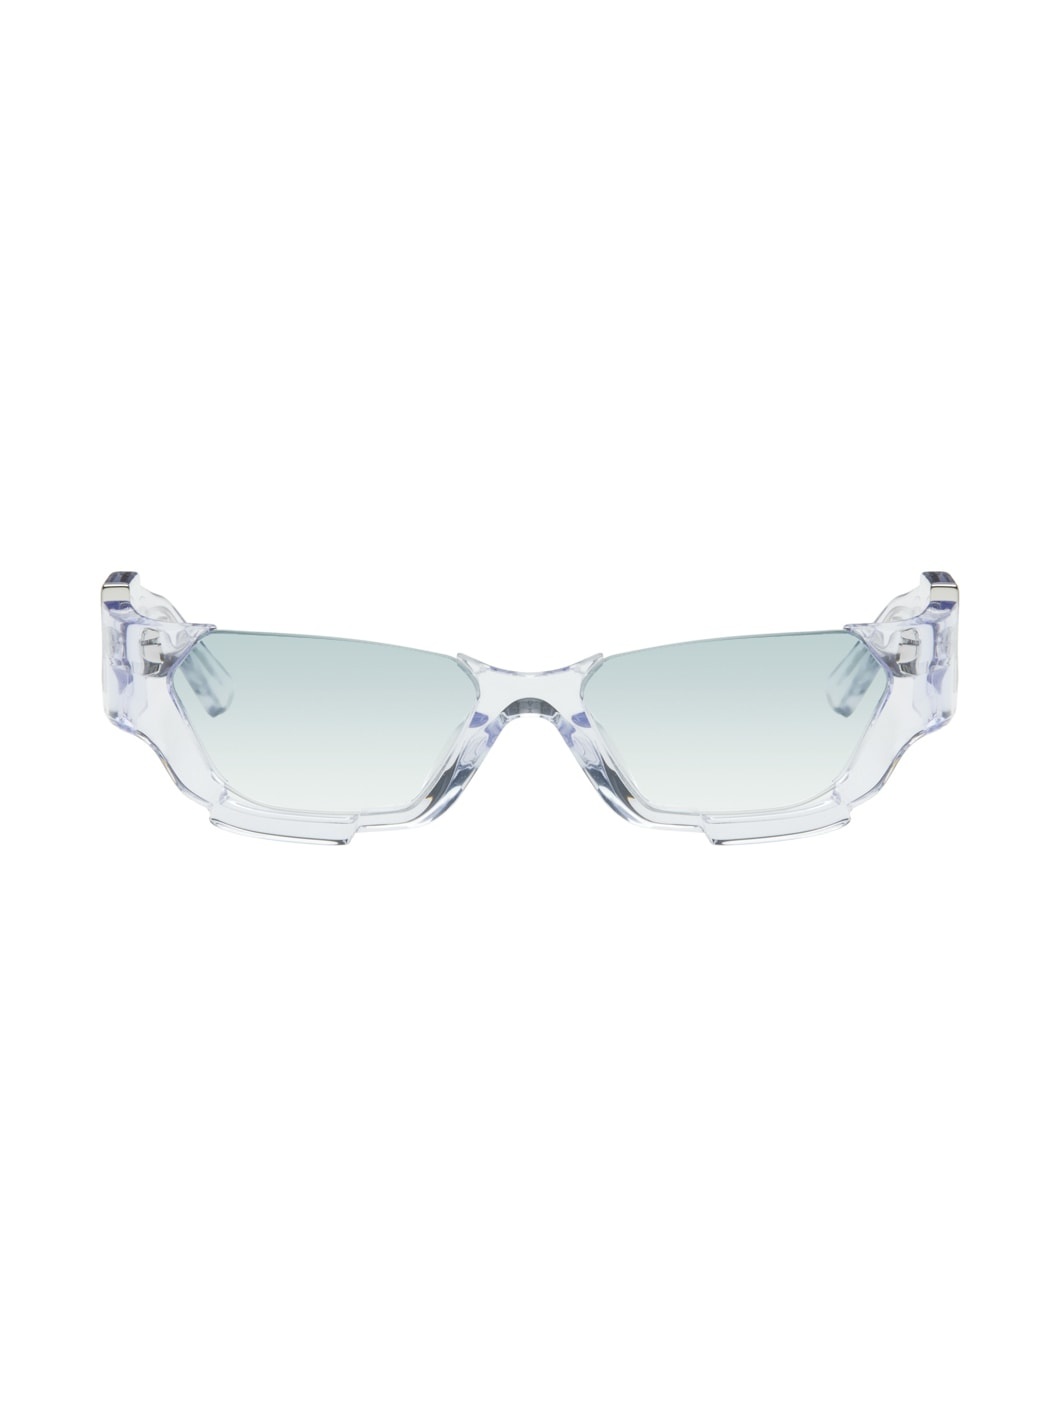 SSENSE Exclusive Transparent Deconstructed Sunglasses - 1